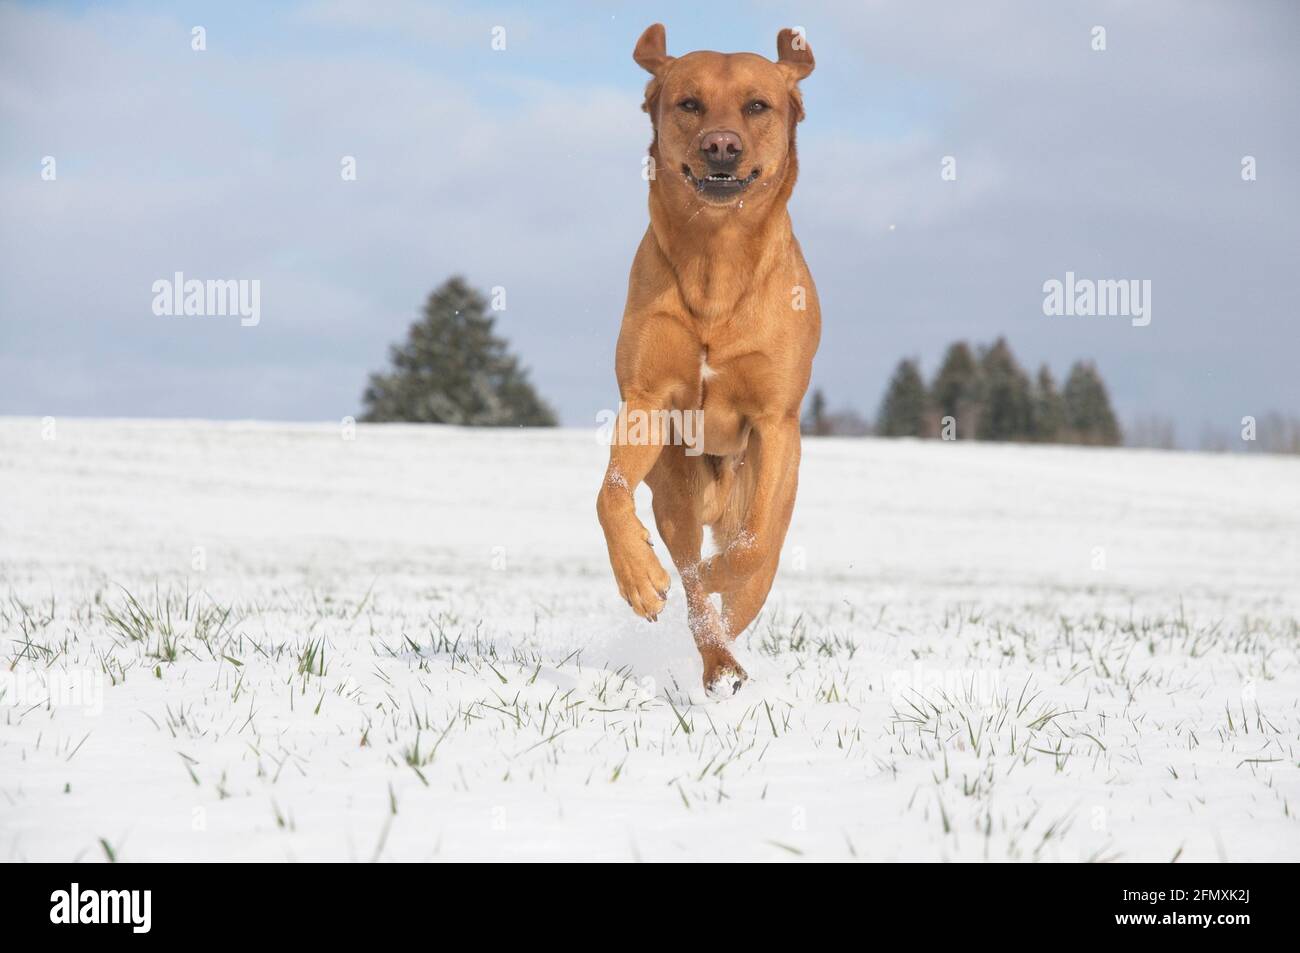 Joyful red brown fox Labrador retriever dog running in the snow Stock Photo